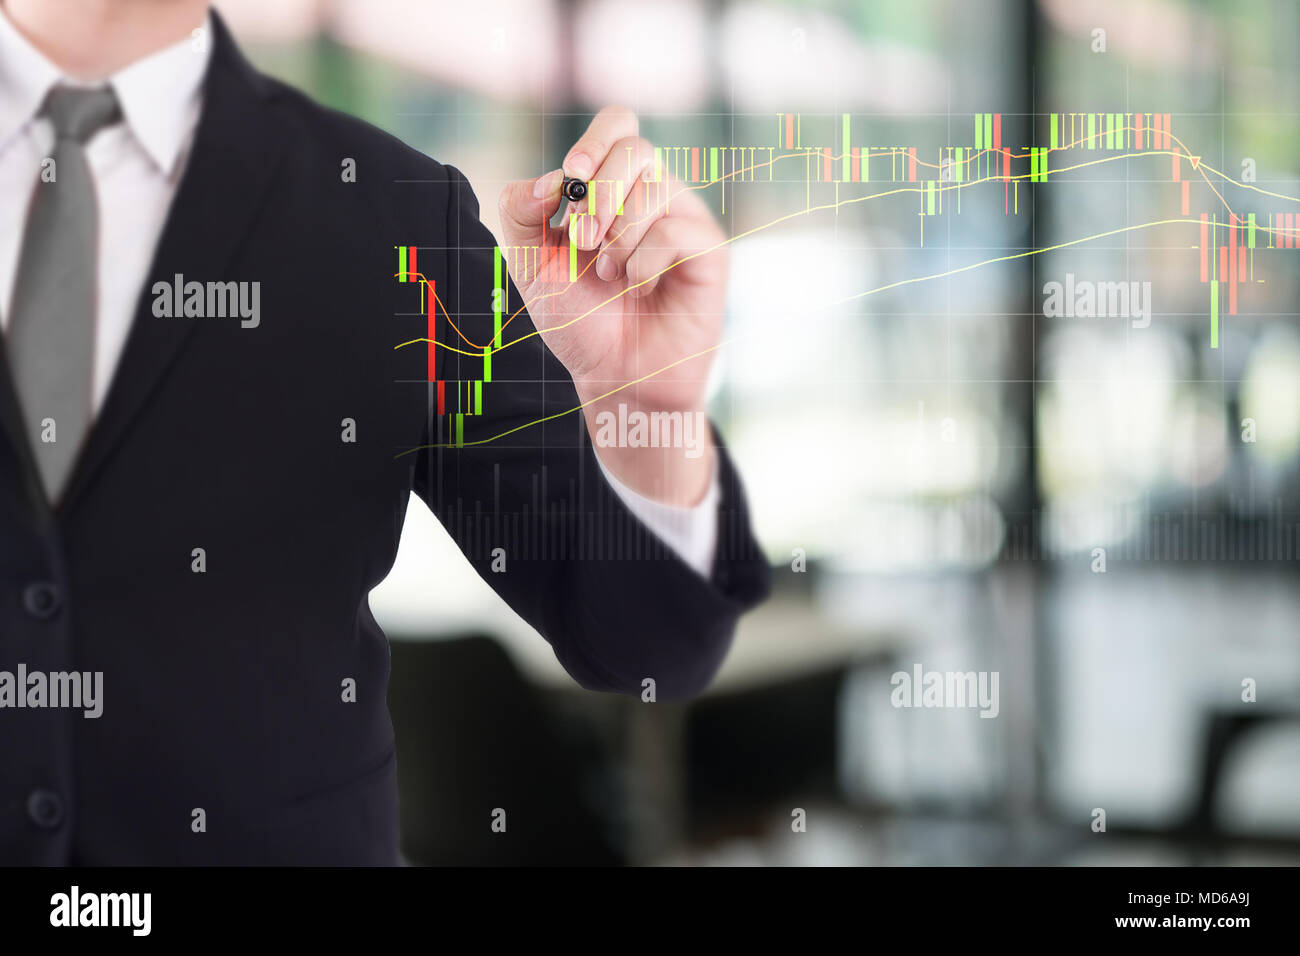 Finance Stock Charts